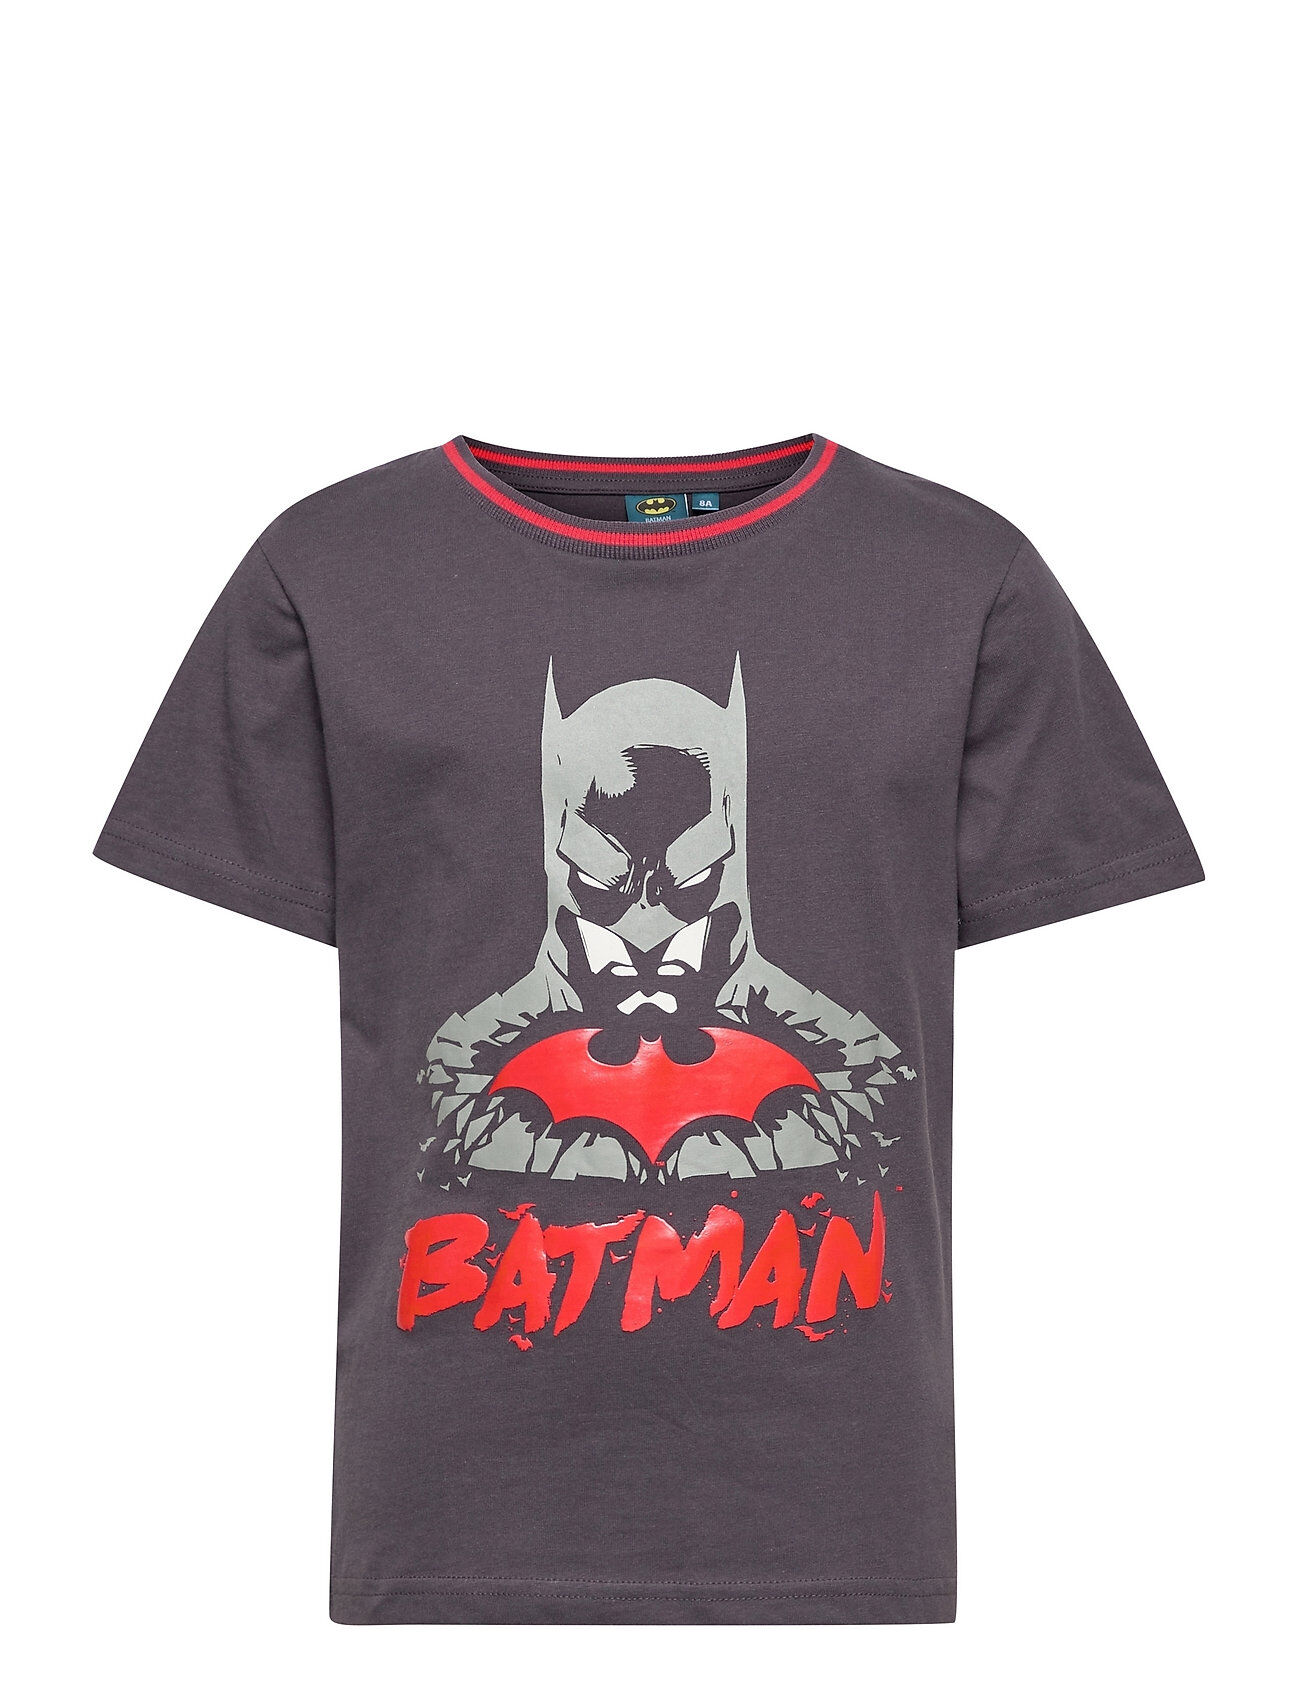 Batman Tshirt T-shirts Short-sleeved Grå Batman